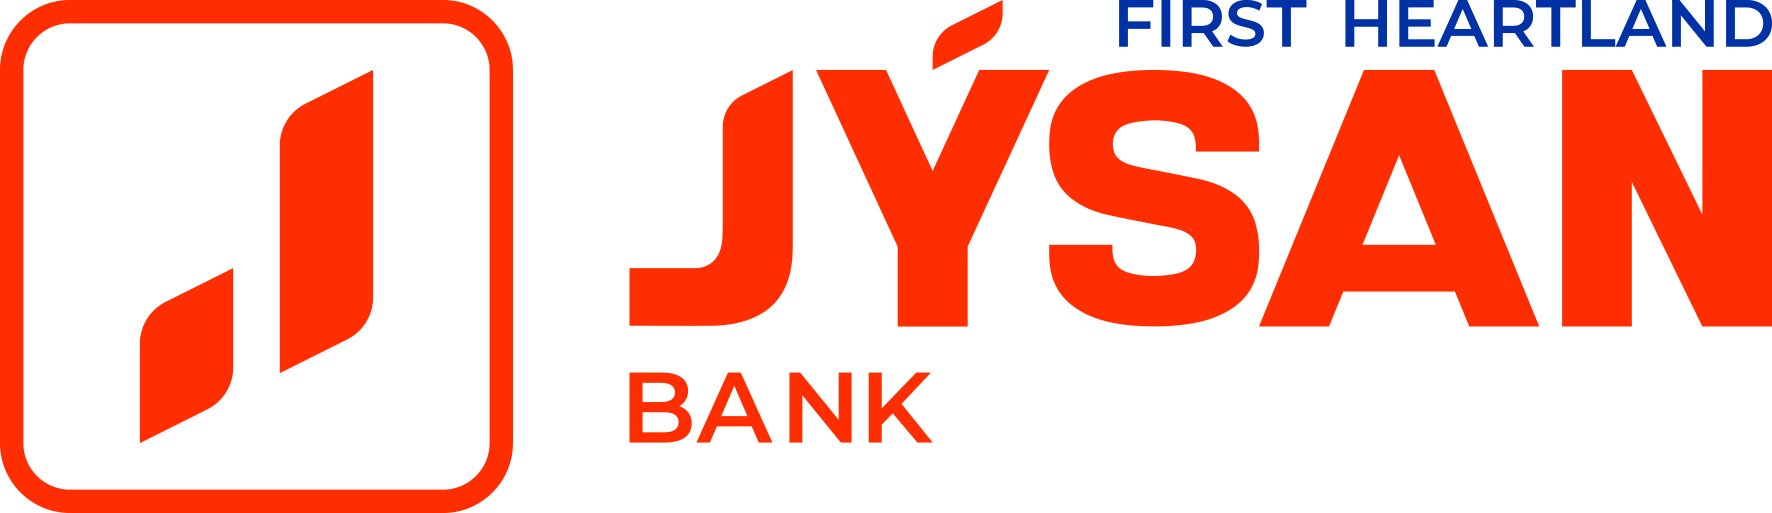 Jýsan Bank және First Heartland Bank бірікті